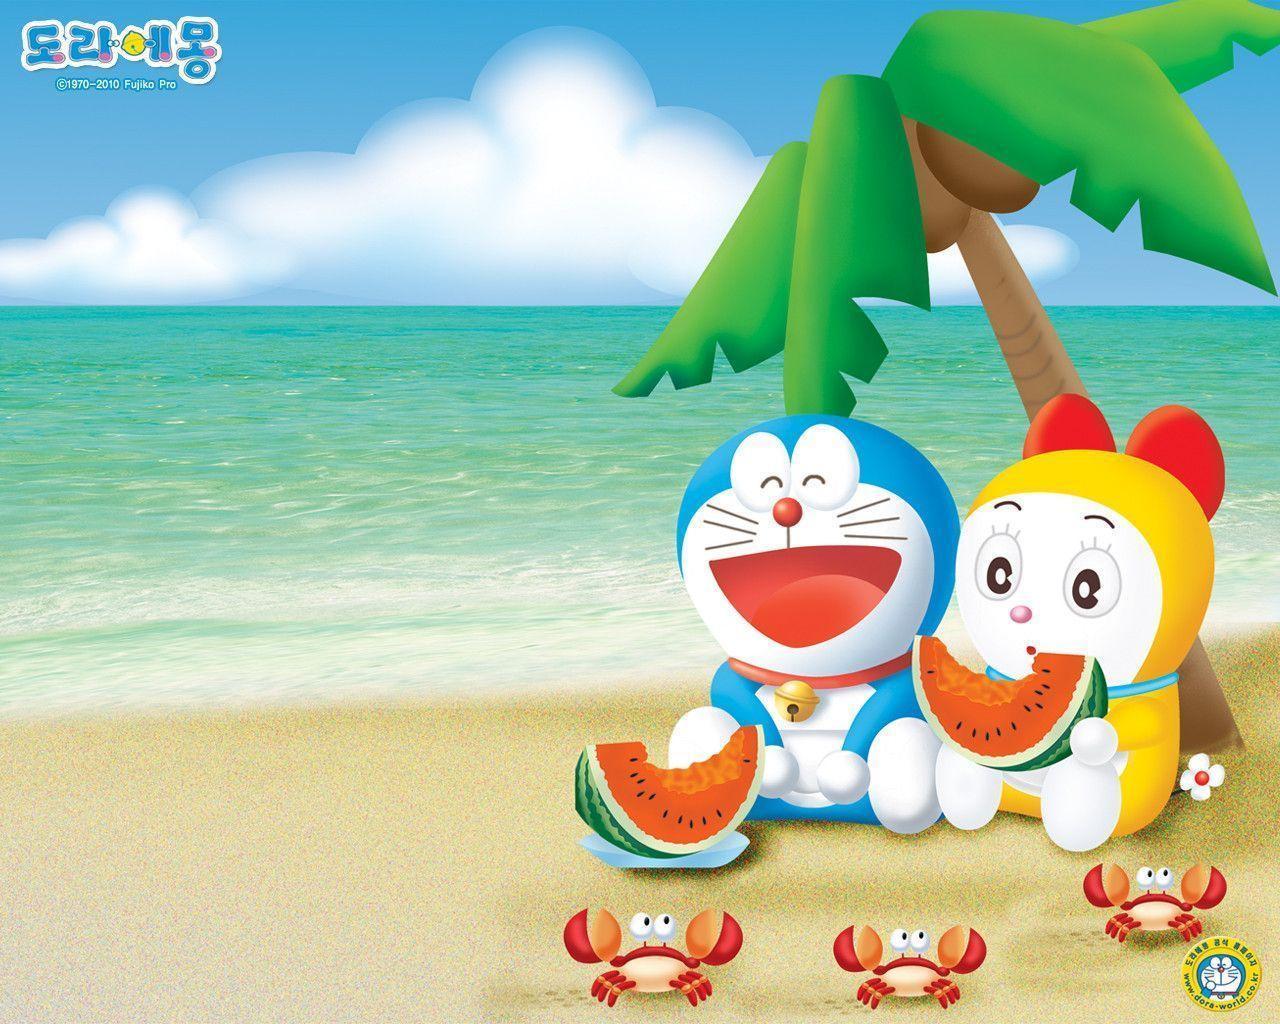 Doraemon Hd Wallpapers Free Download - Wallpaperforu